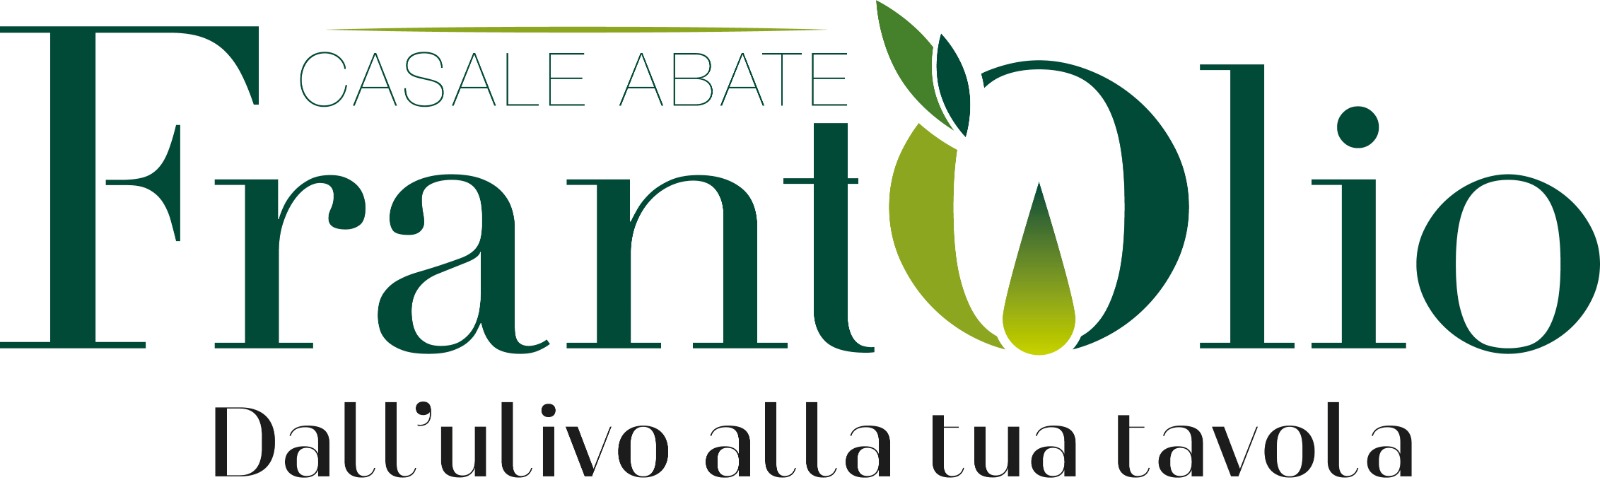 Logo Nuovo Frantoio Menfi, Casale Abate